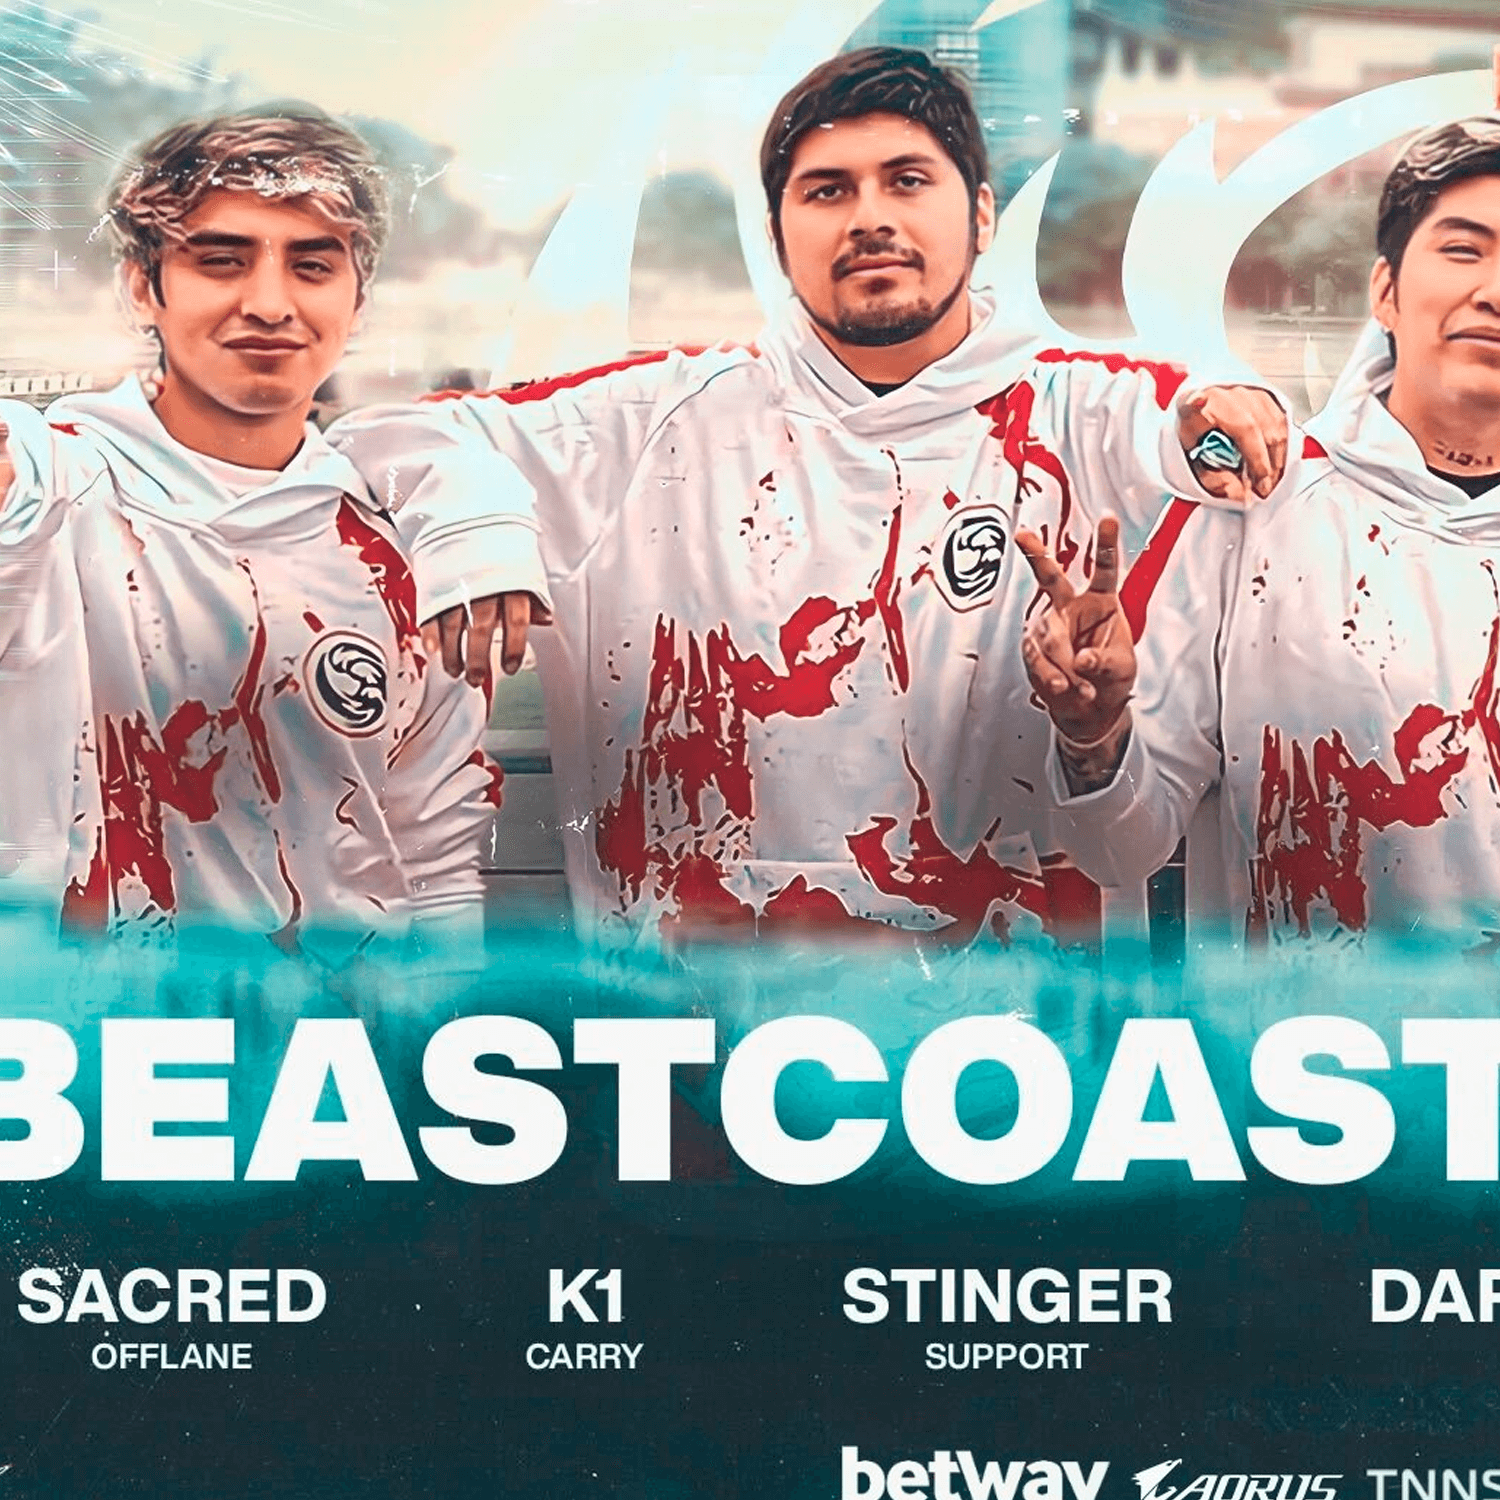 ¡Beastcoast presenta su nuevo roster!